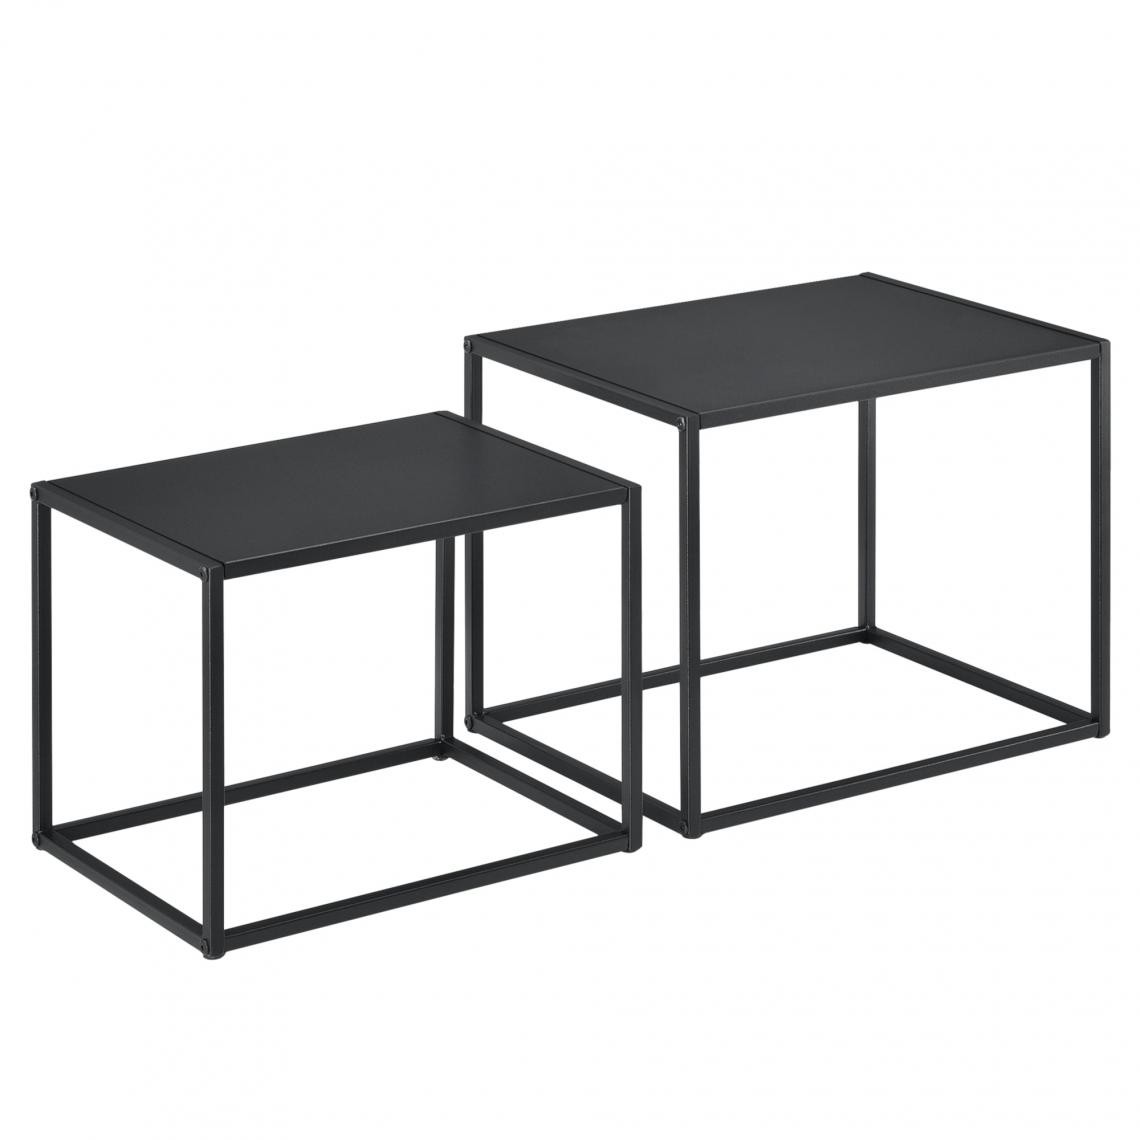 Helloshop26 - Lot de 2 tables basses rectangulaires en métal noir 03_0005782/2 - Tables basses